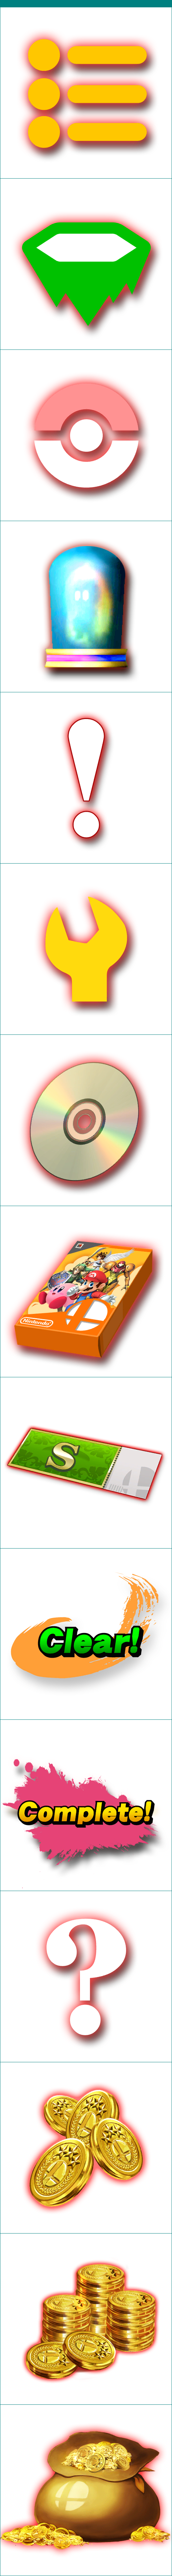 Super Smash Bros. for Wii U - Prize Icons